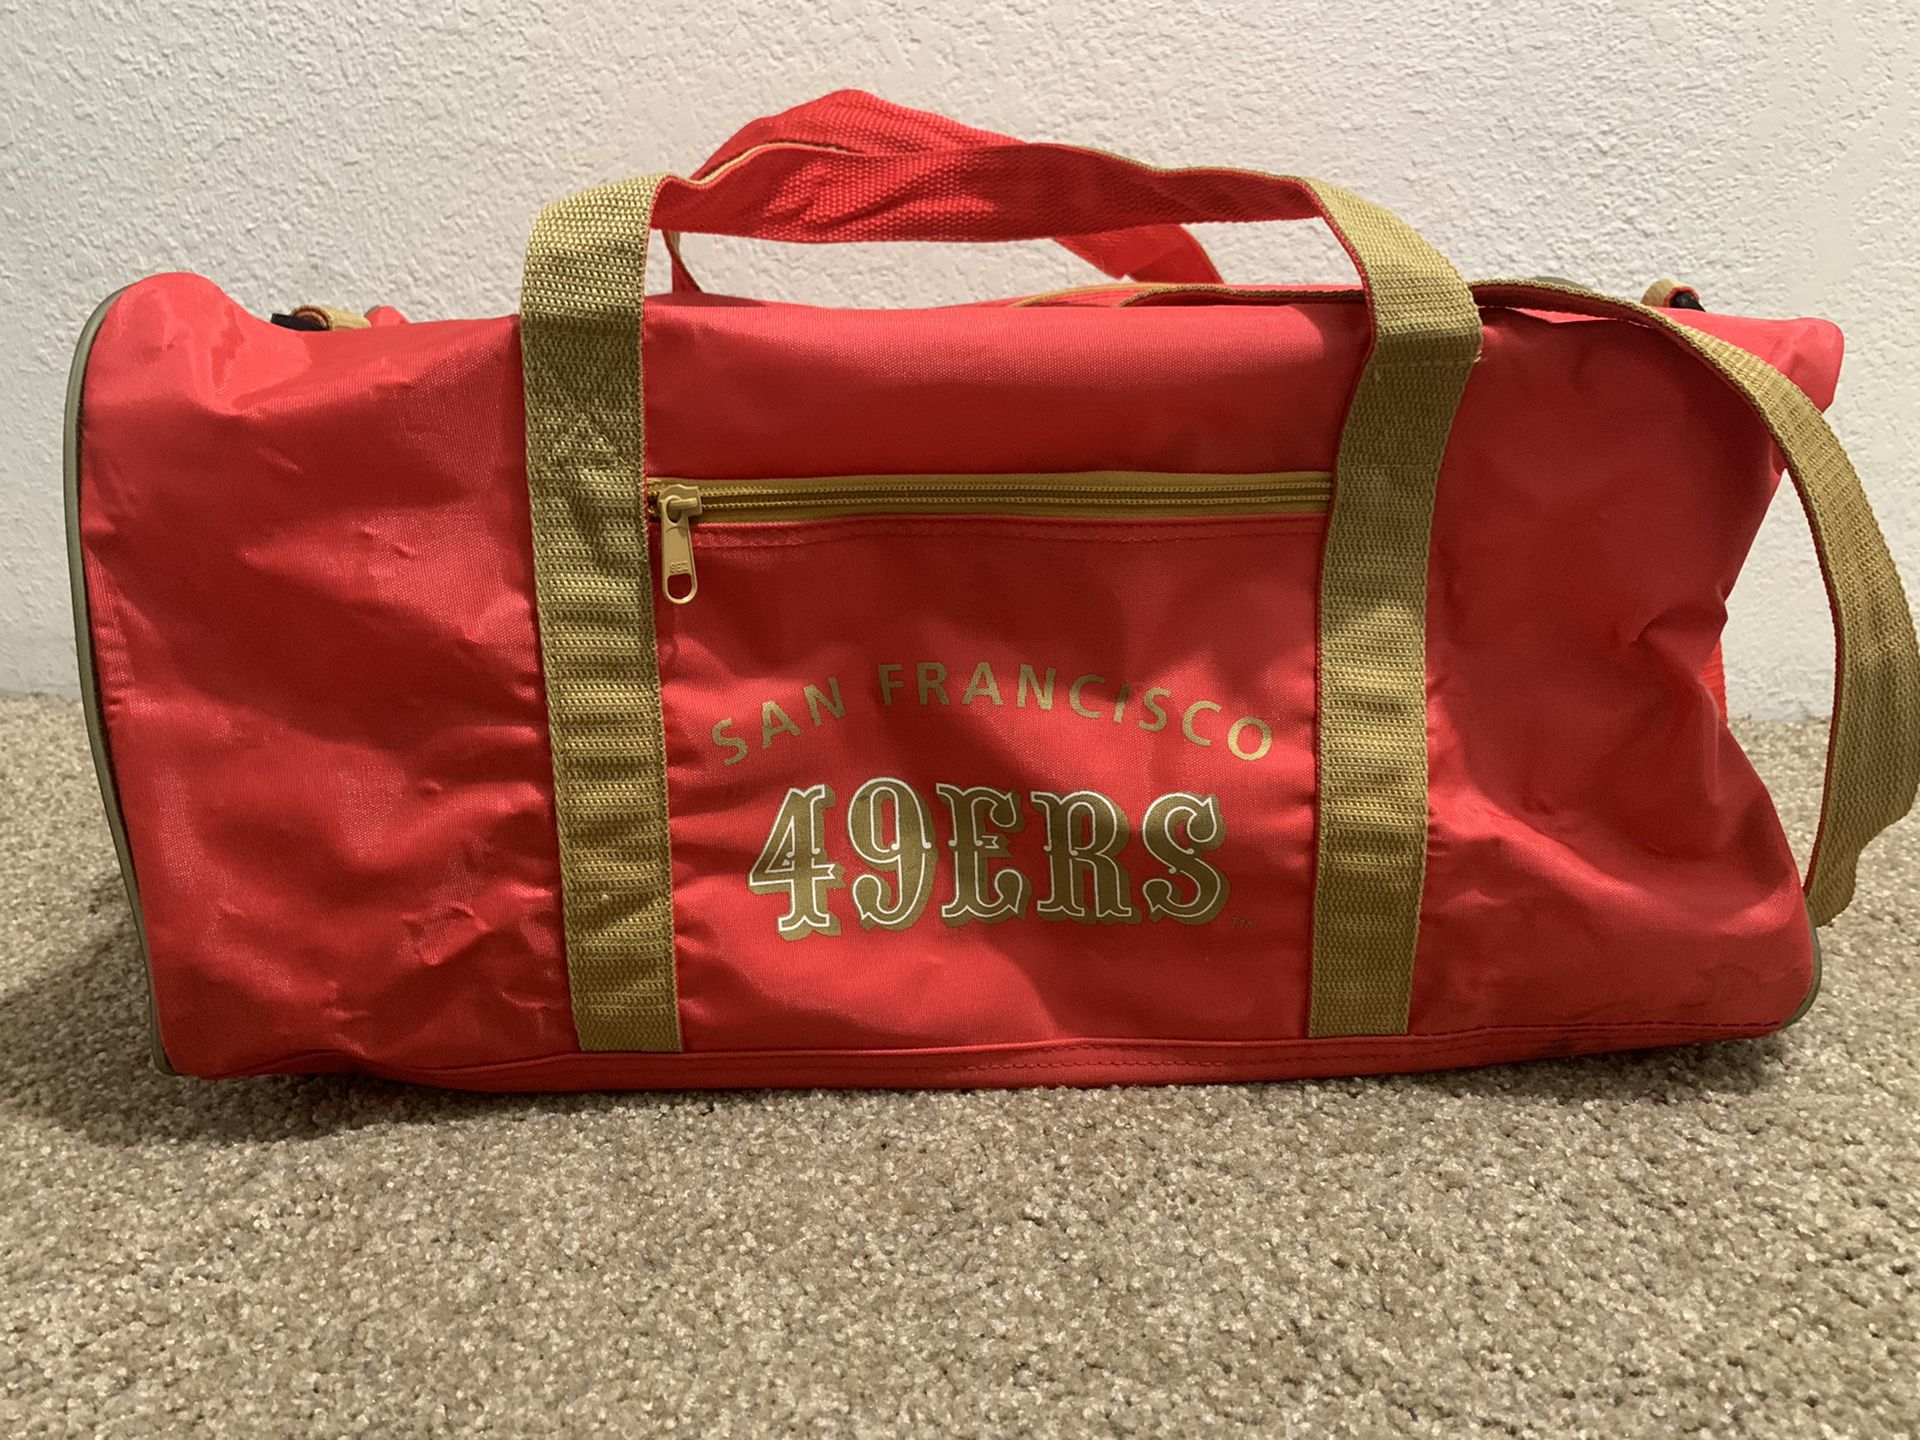 Vintage 49ers duffle bag